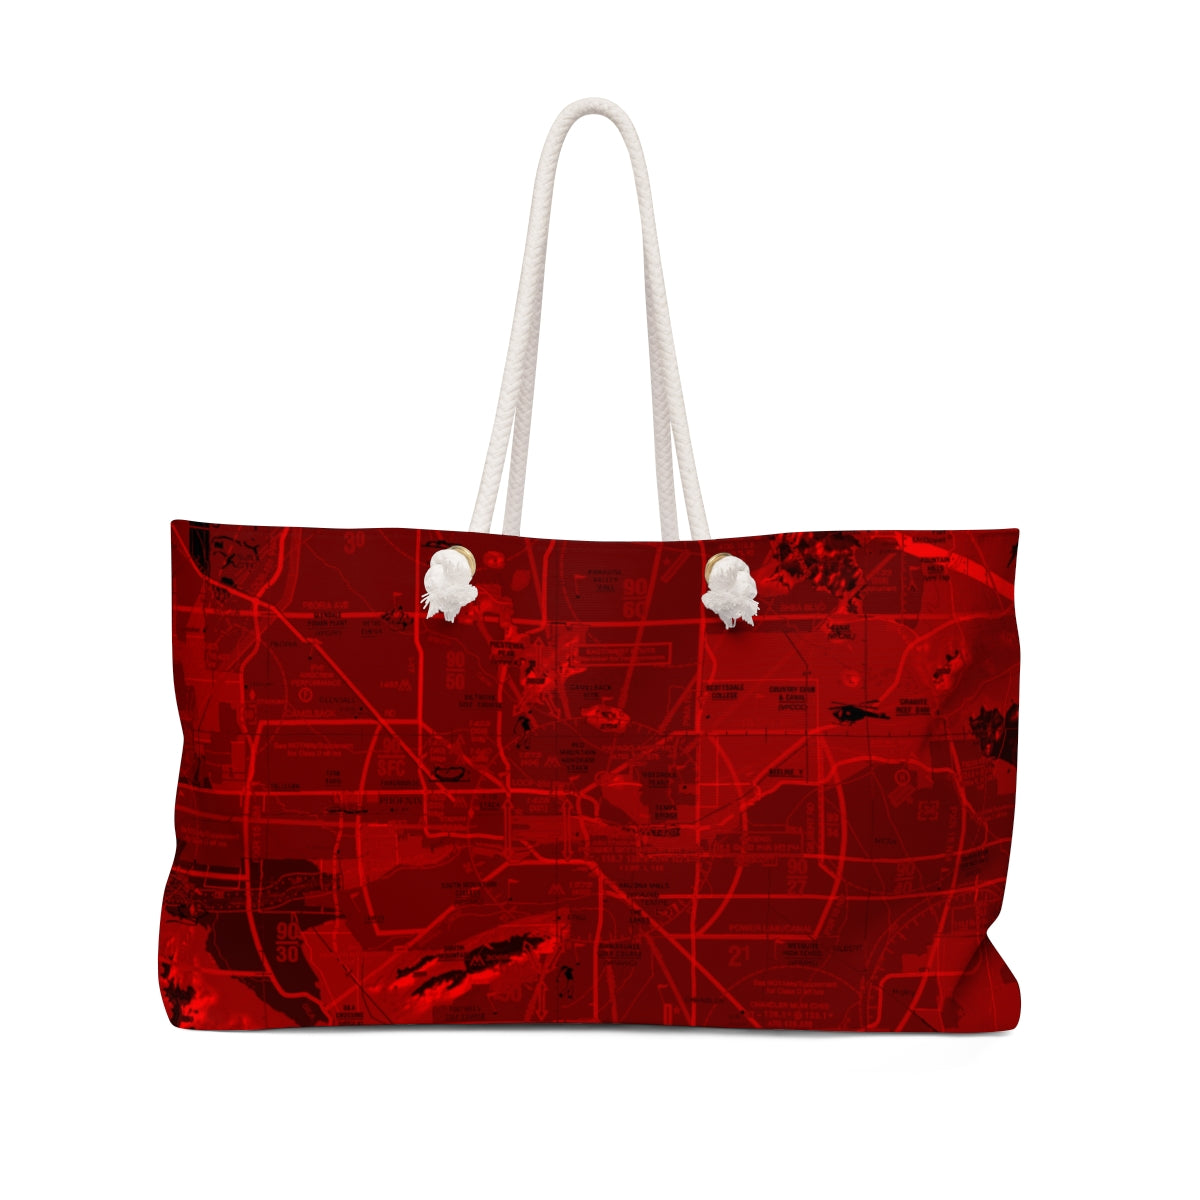 Aeronautical Chart weekender tote bag (PHX/red)